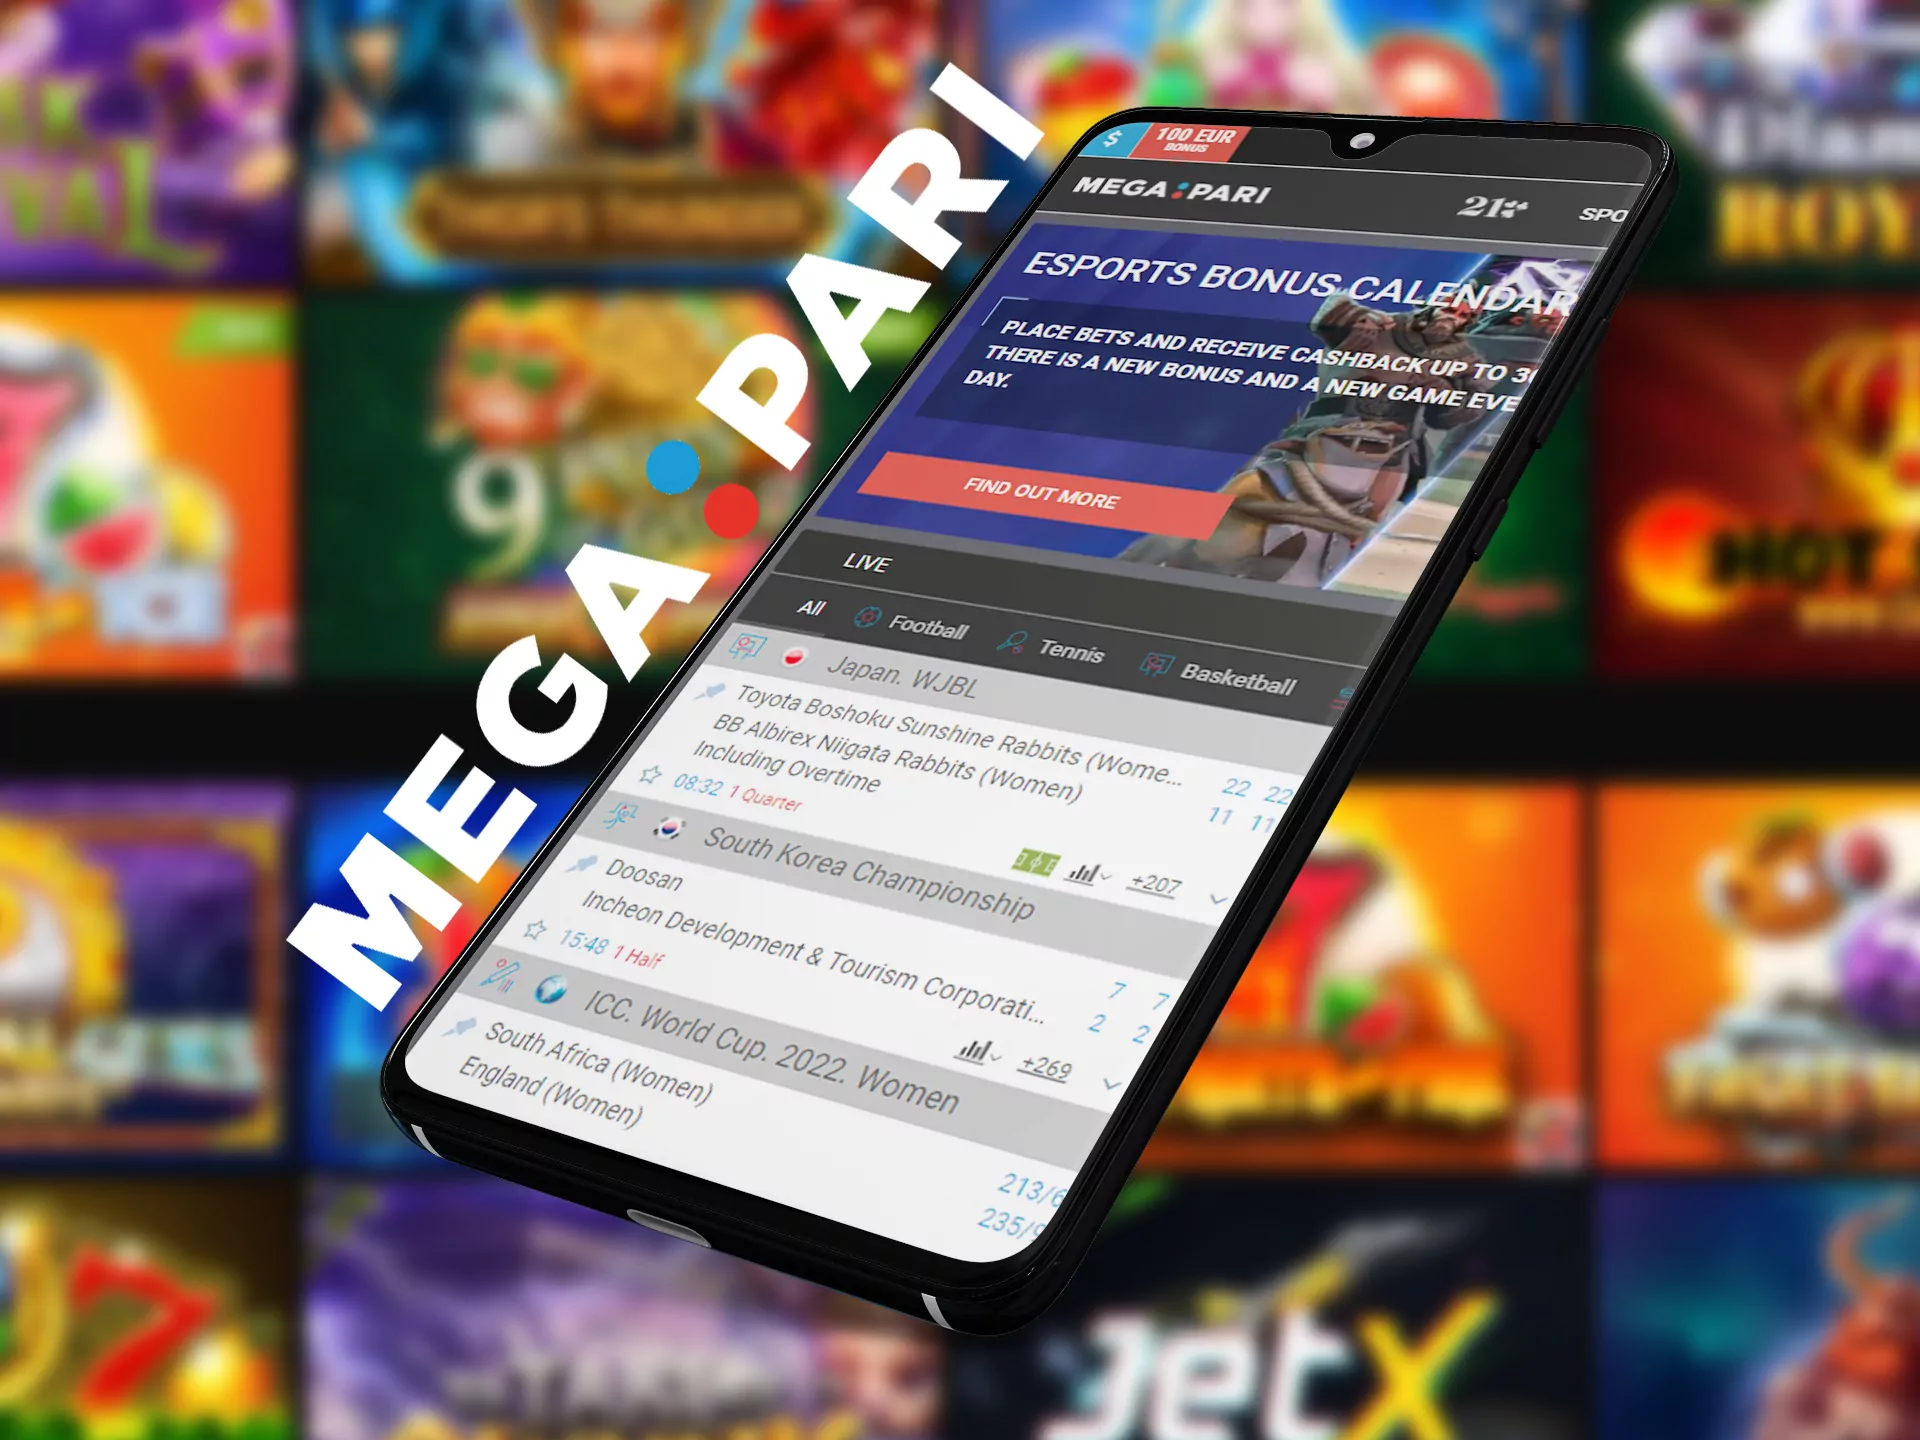 Easy betting at Megapari app.